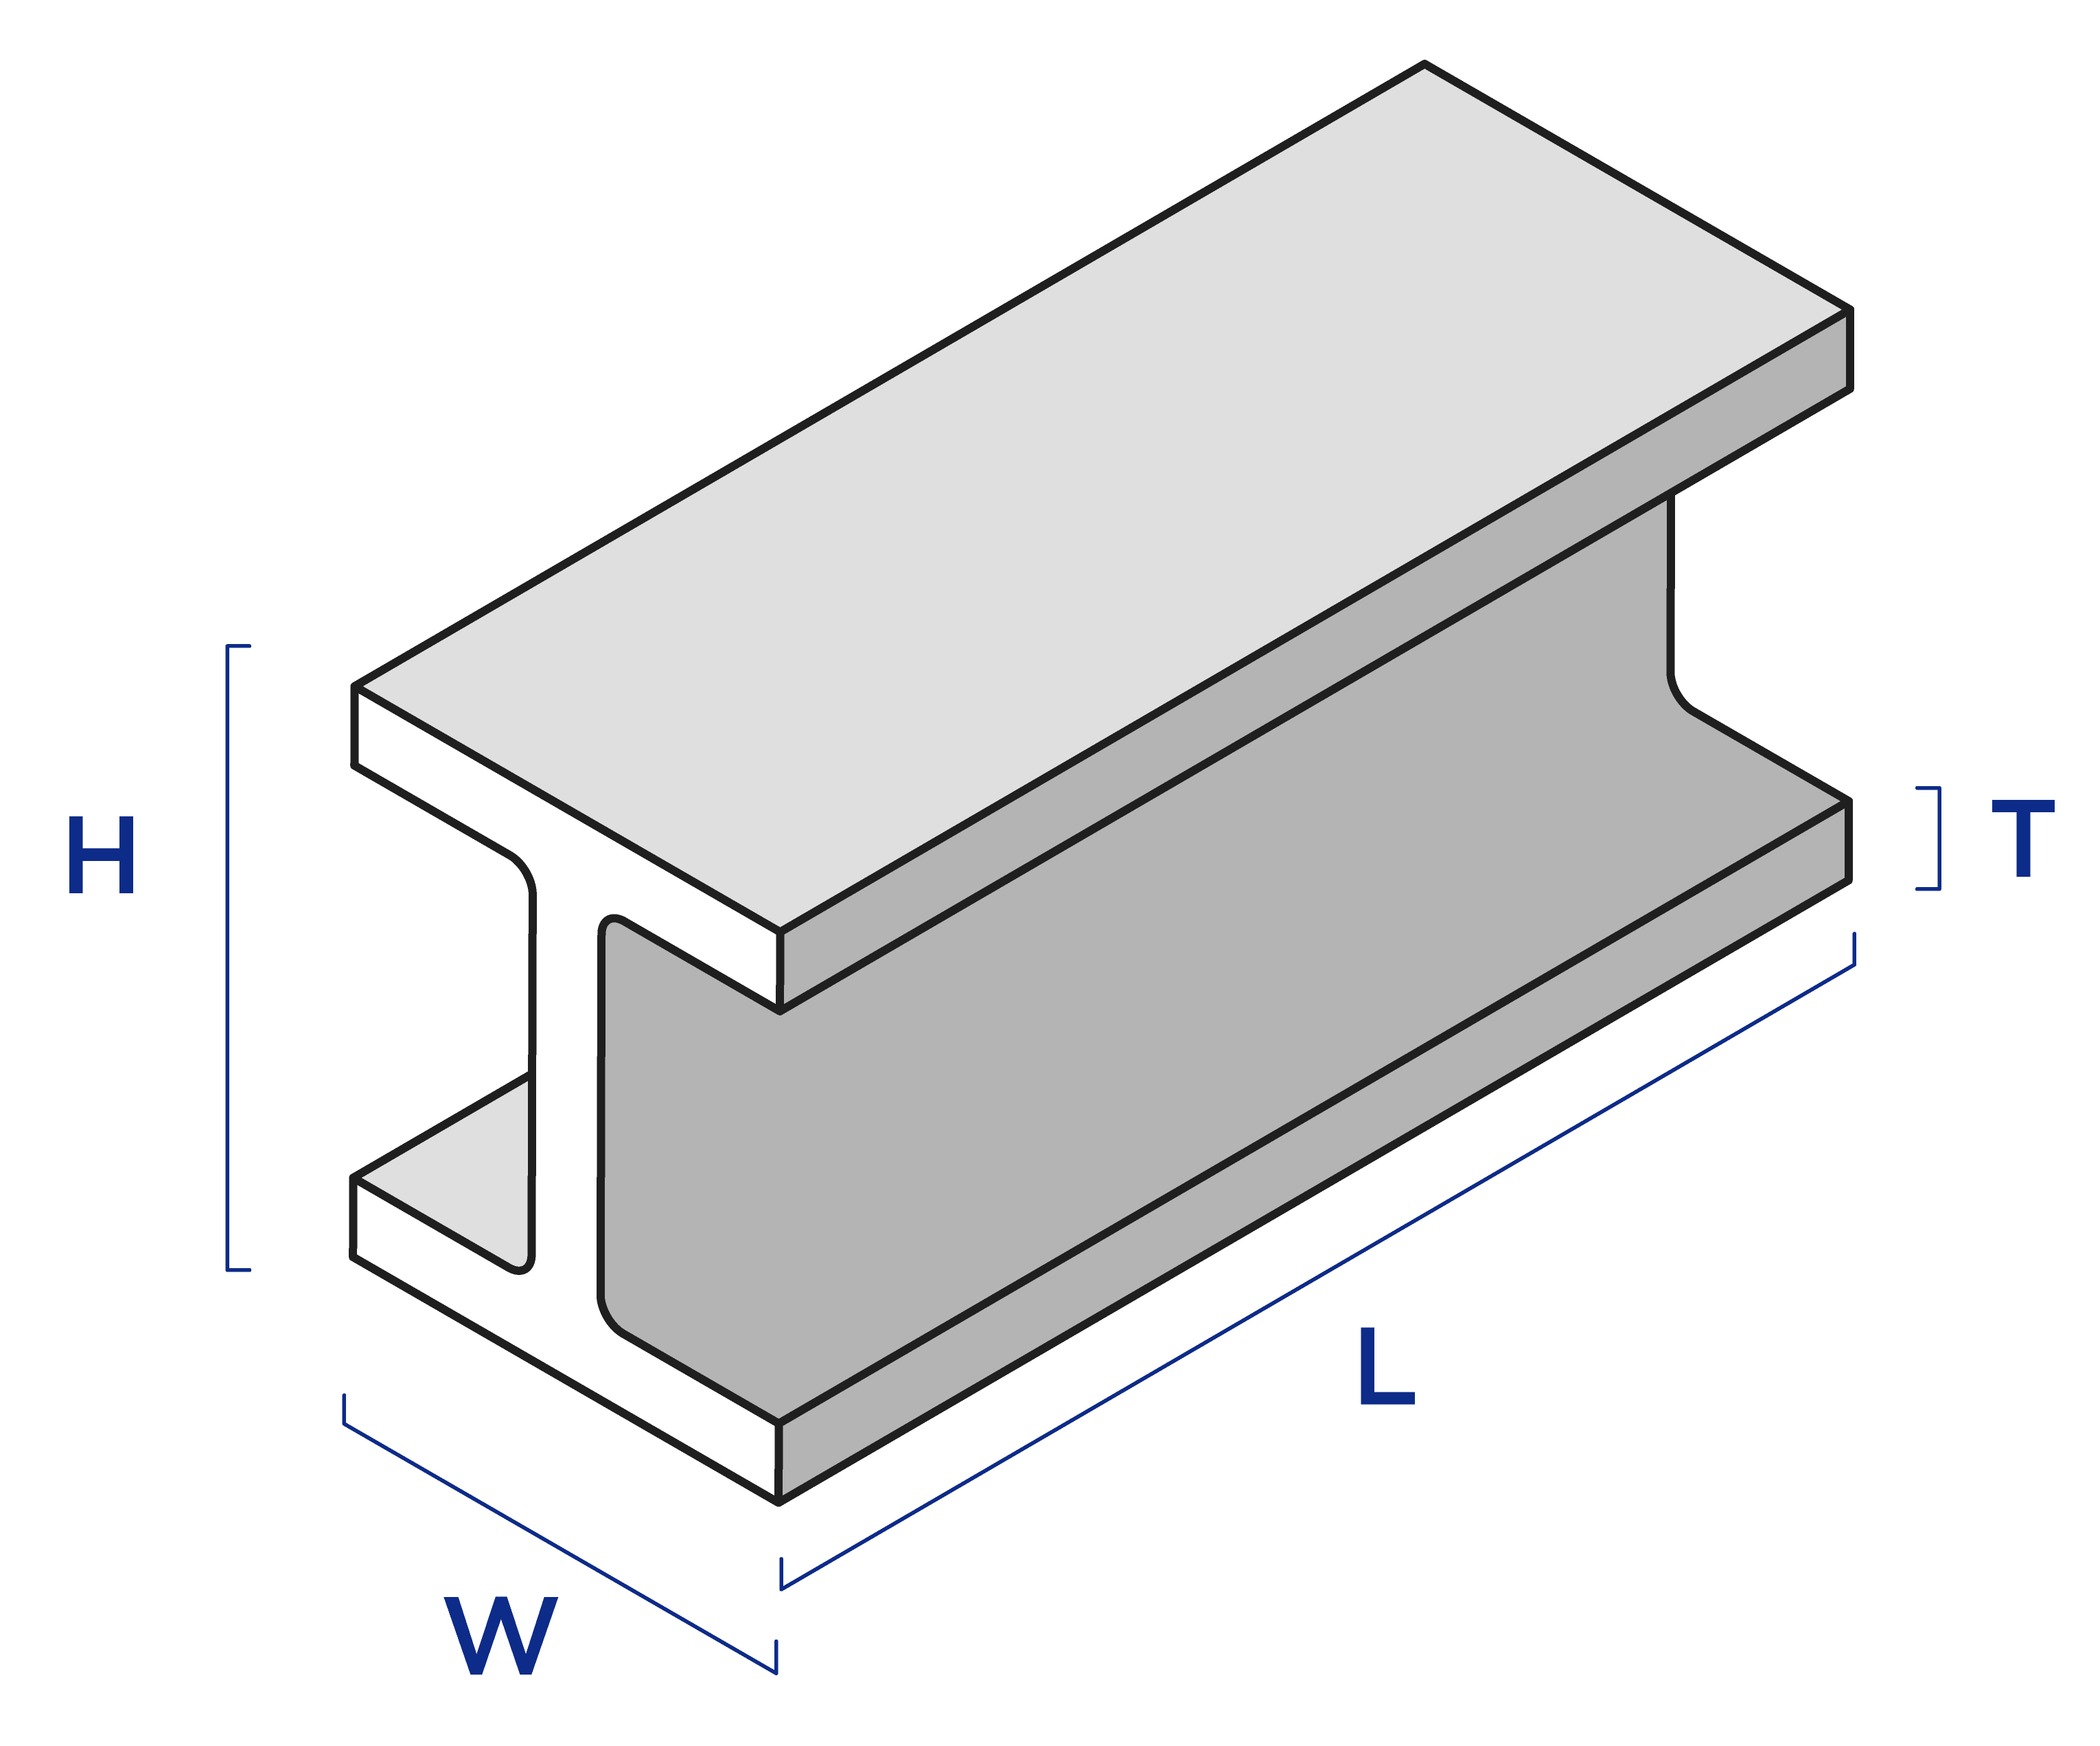 Diagram to measure a beam